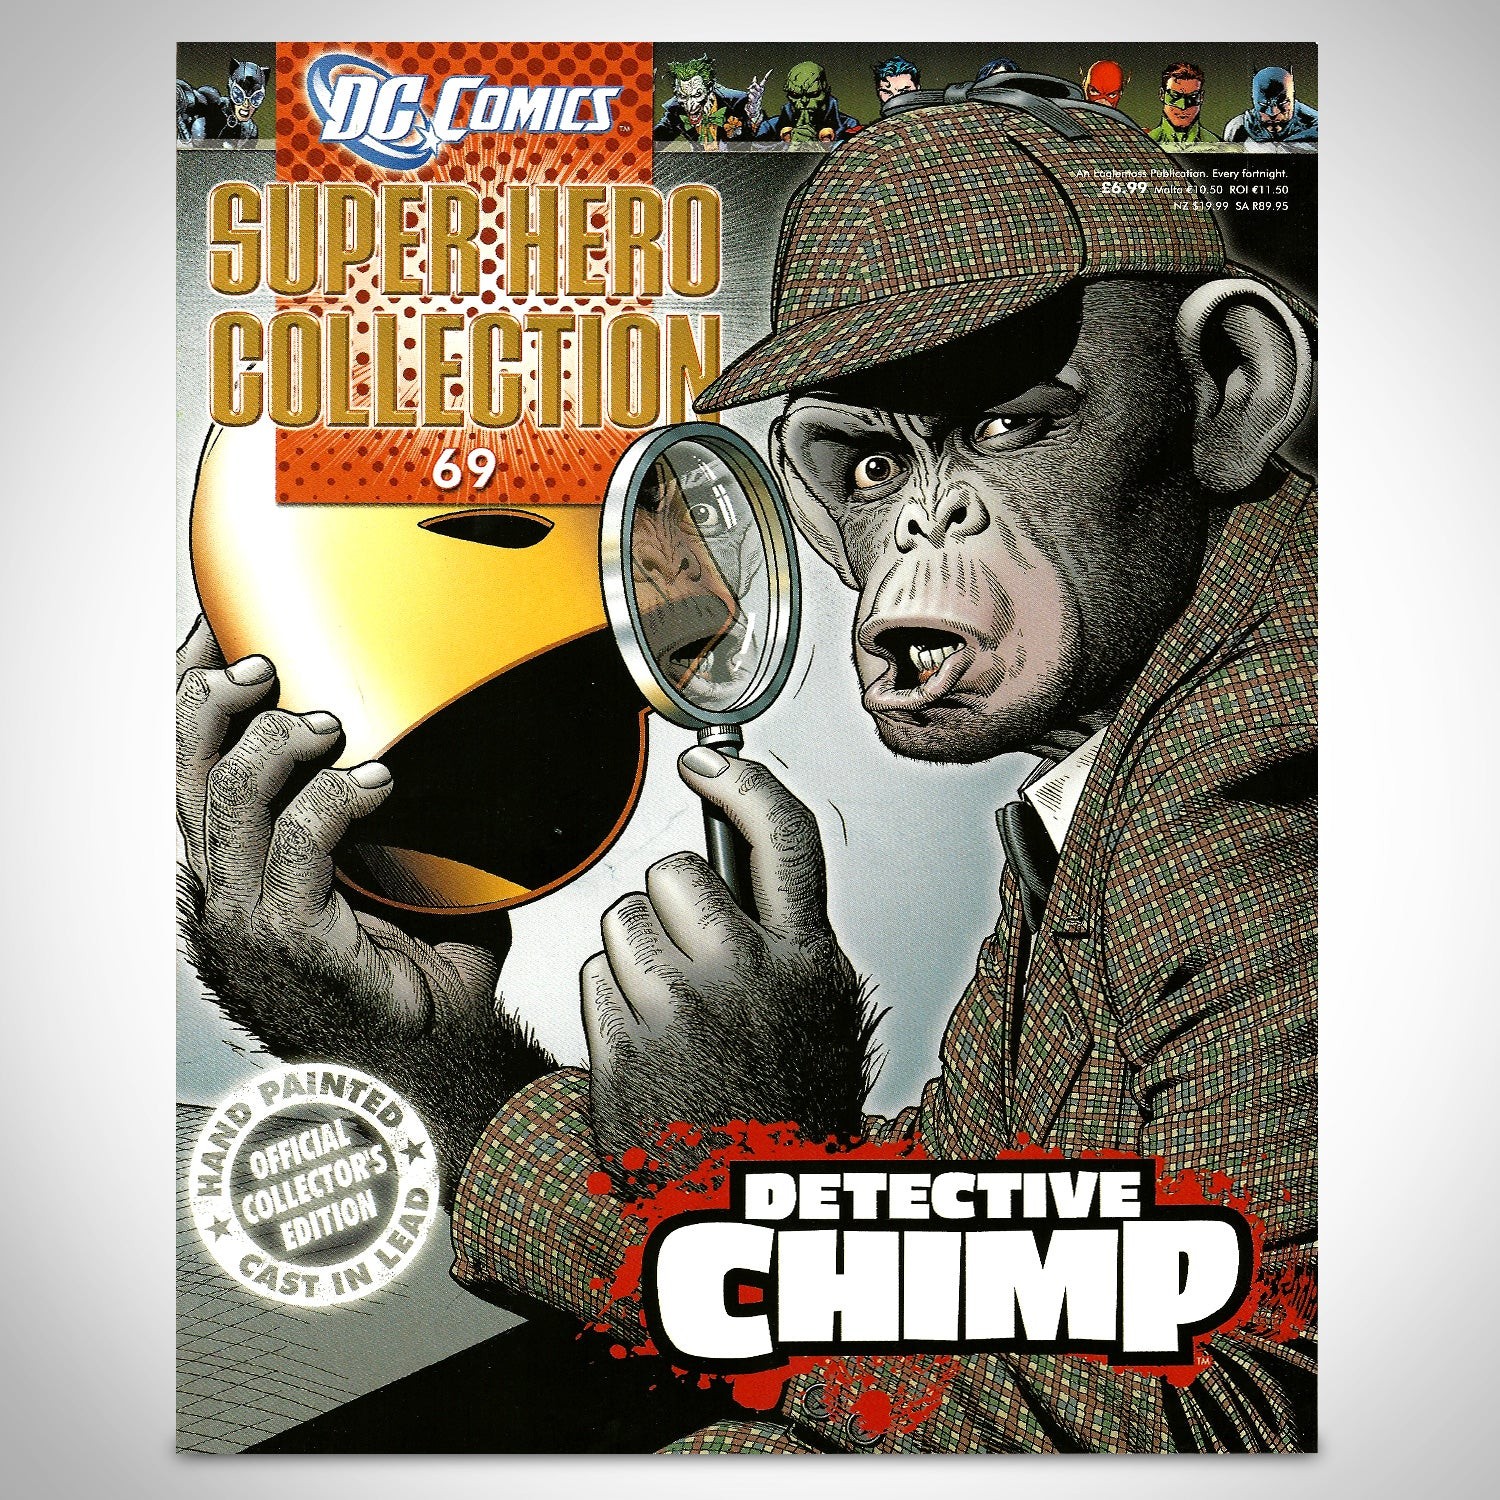 lego batman 3 detective chimp